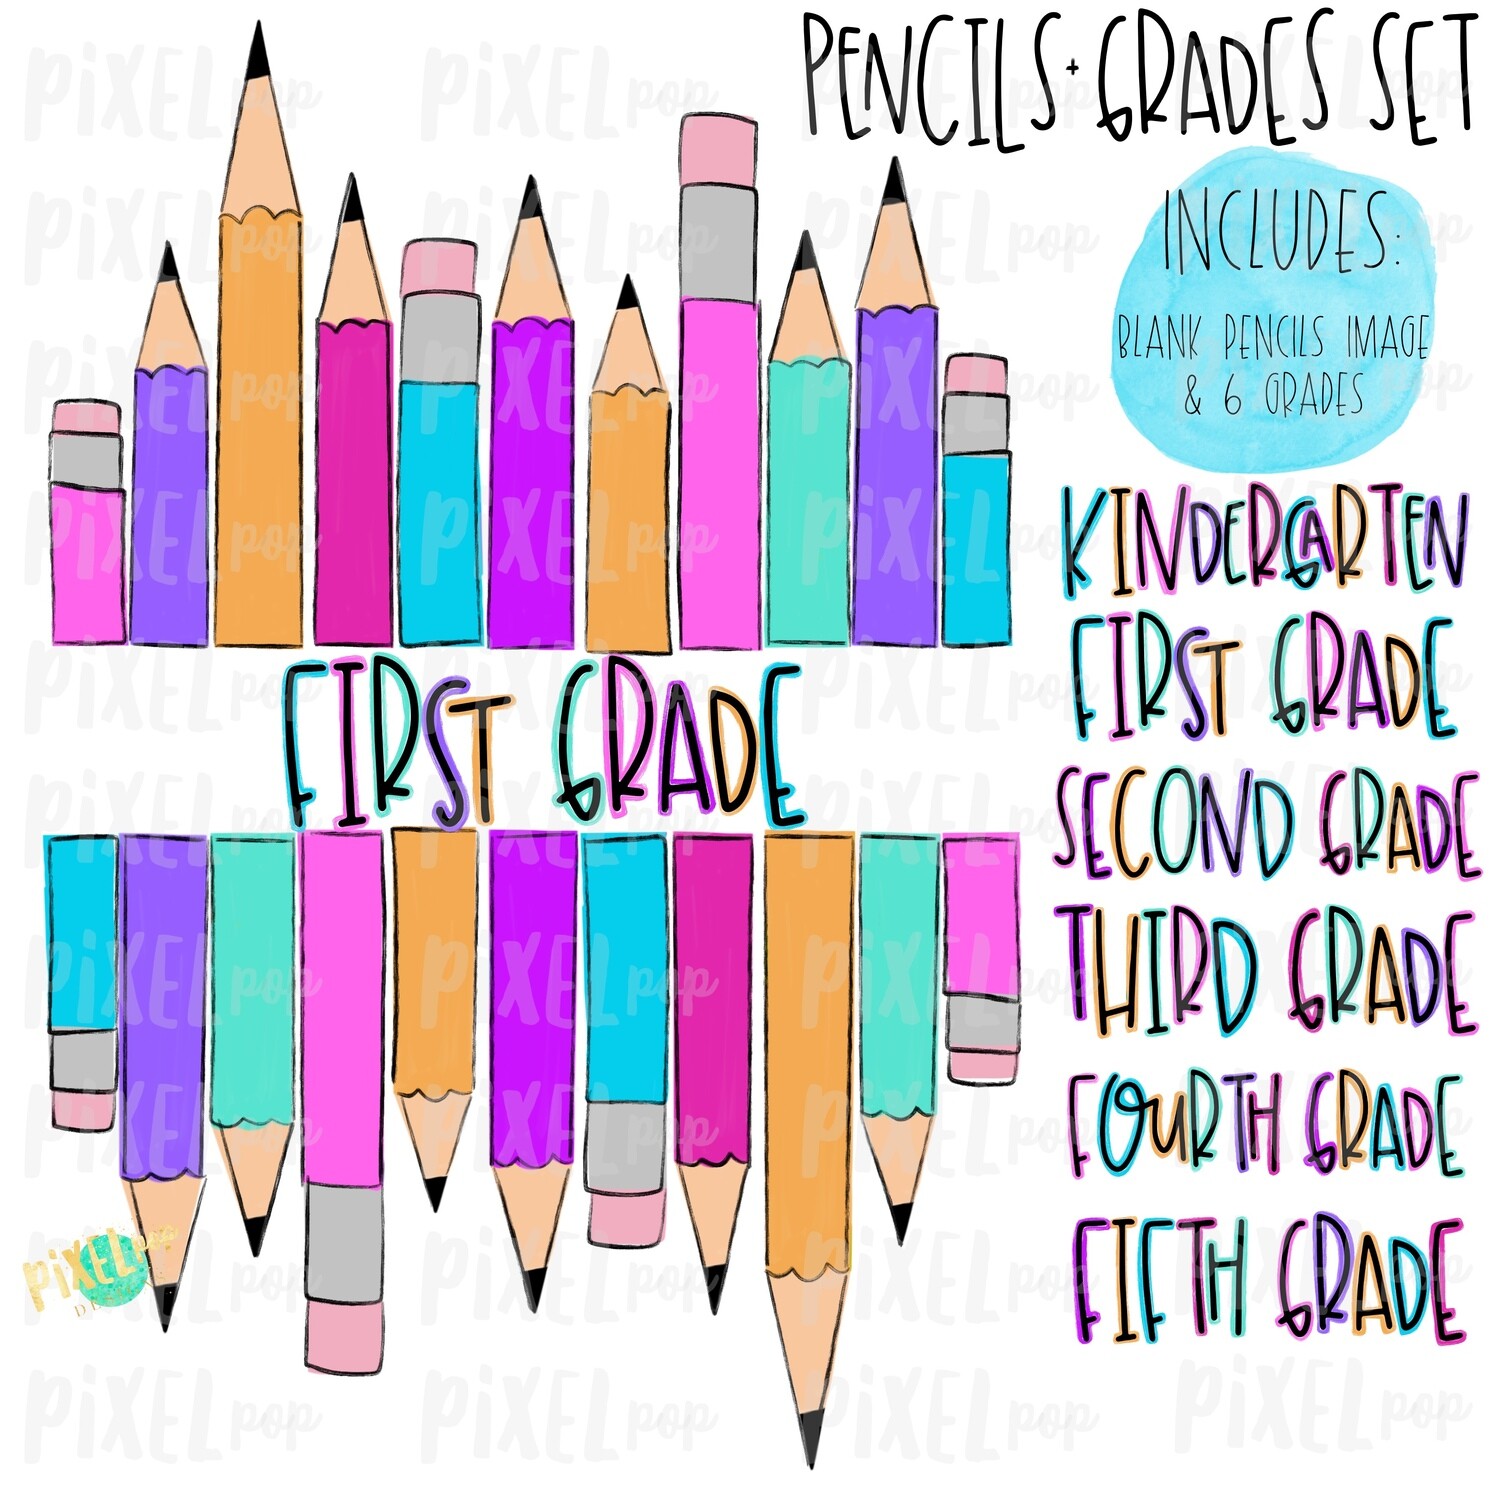 Stacked Pencils with Grades Set Pink | School Design | Sublimation | Digital Art | Hand Painted | Digital Download | Printable Artwork | Art